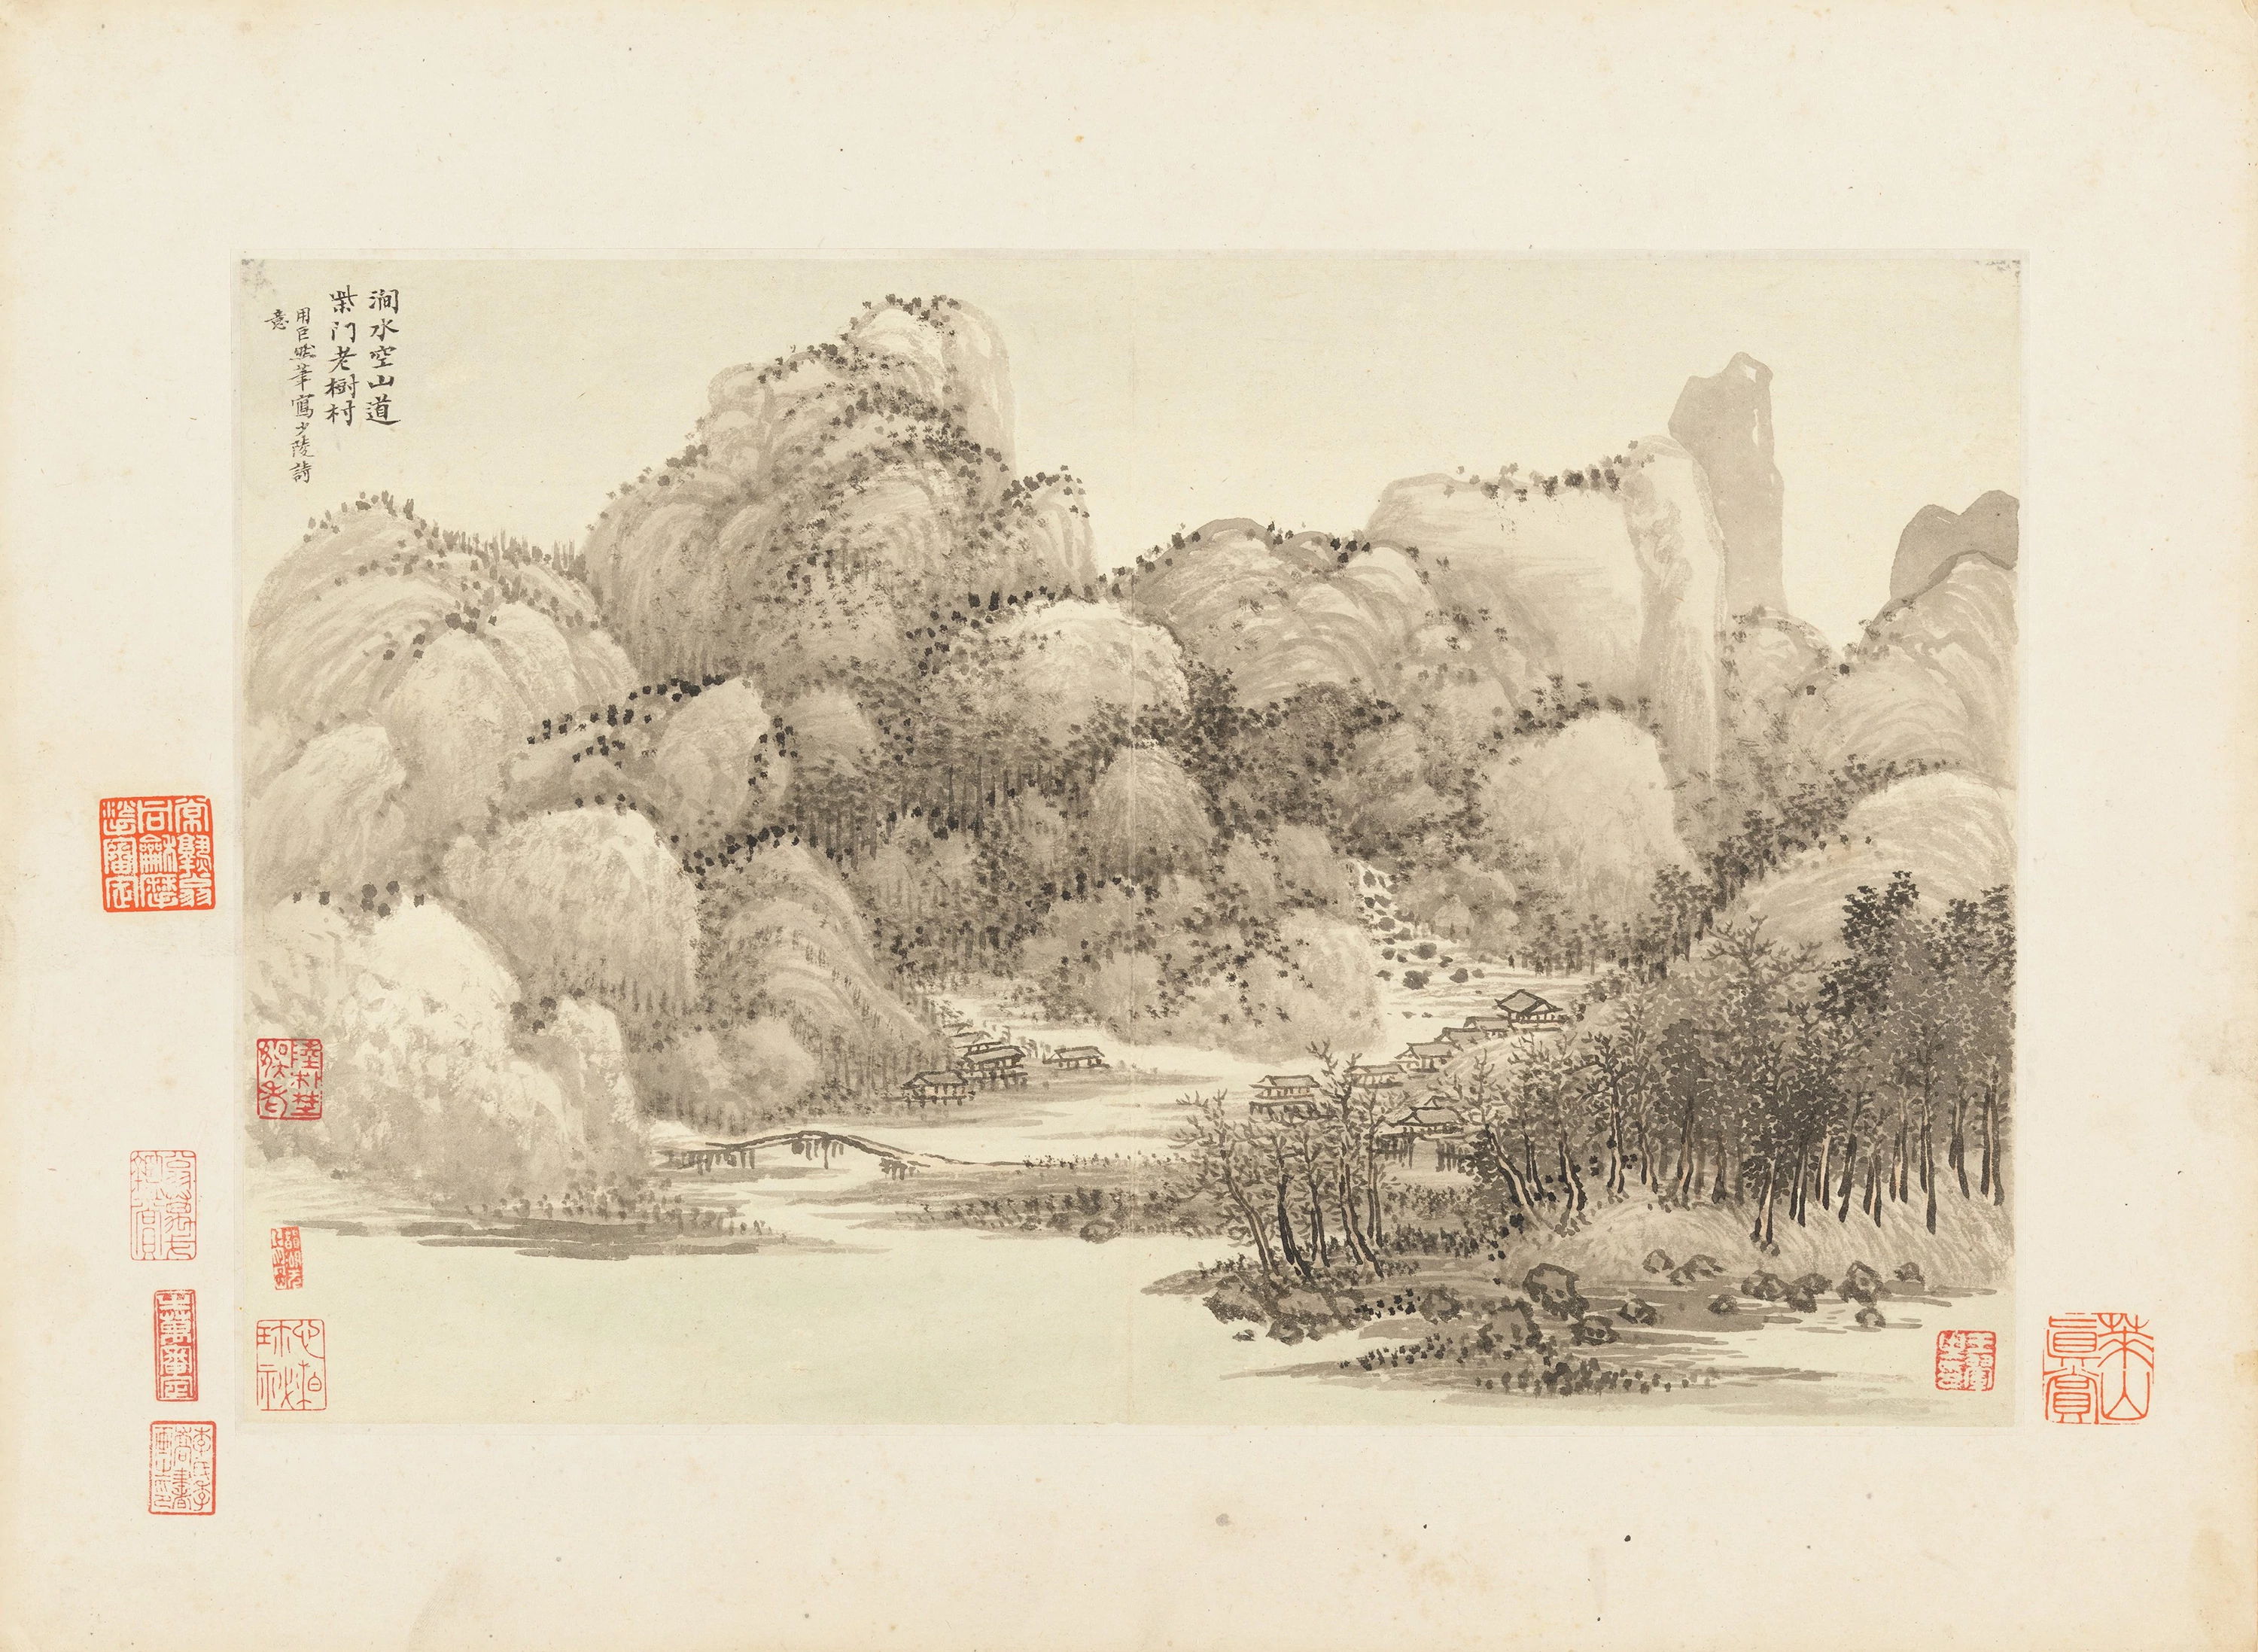 Landscapes 5, 仿古山水圖, Wang Hui (王翚)